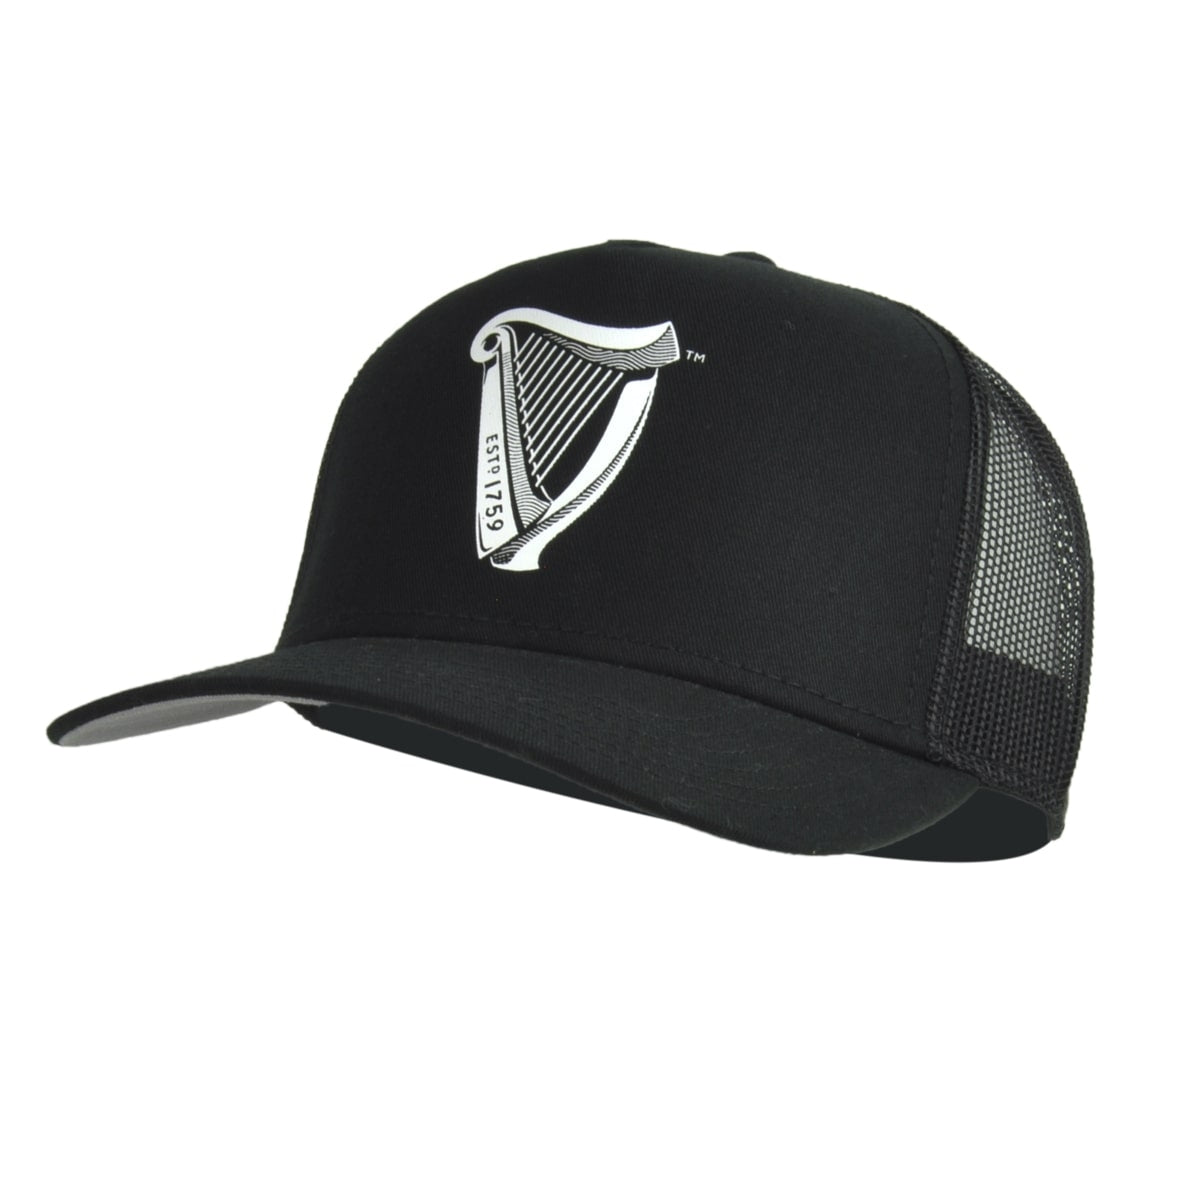 An adjustable Guinness Premium Black & White Harp Cap with the Guinness UK logo on it.